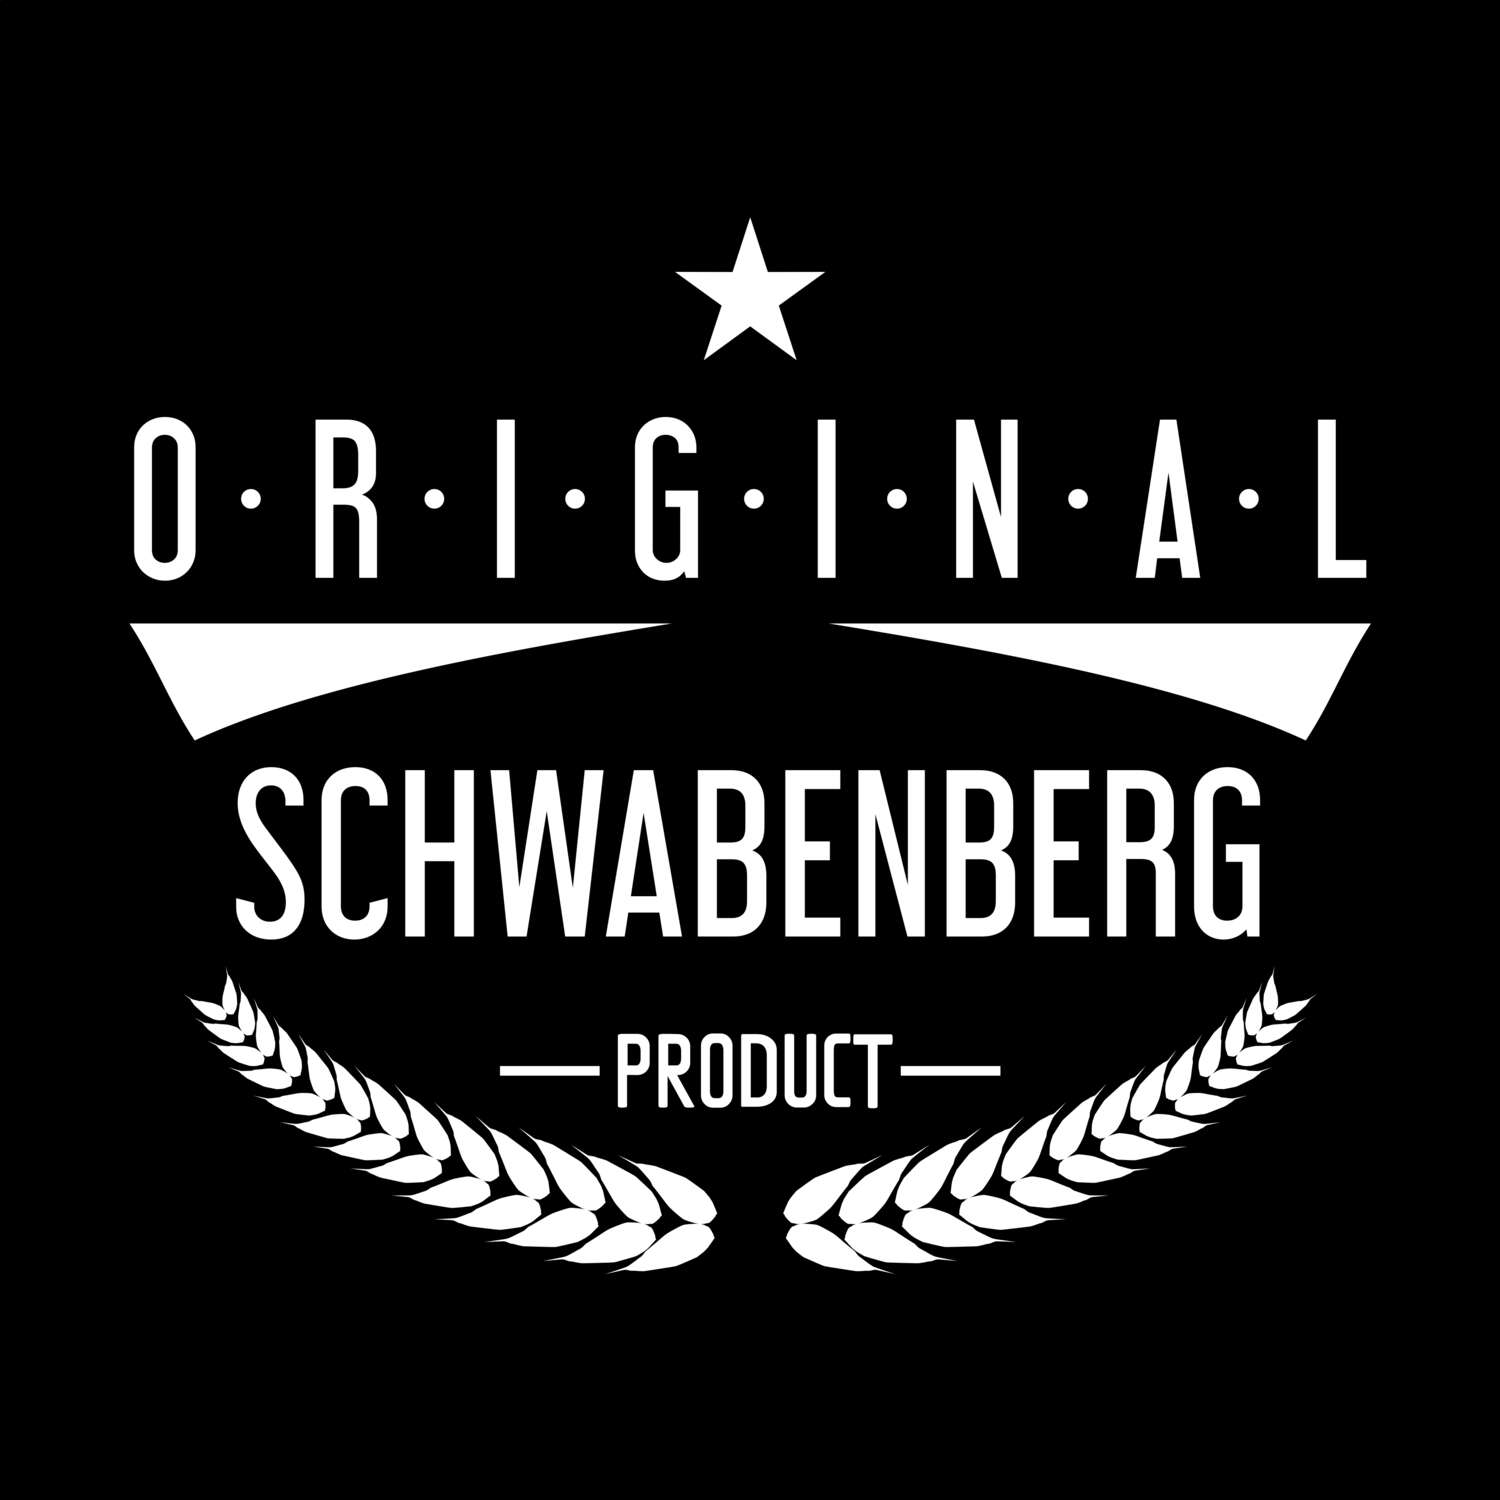 Schwabenberg T-Shirt »Original Product«